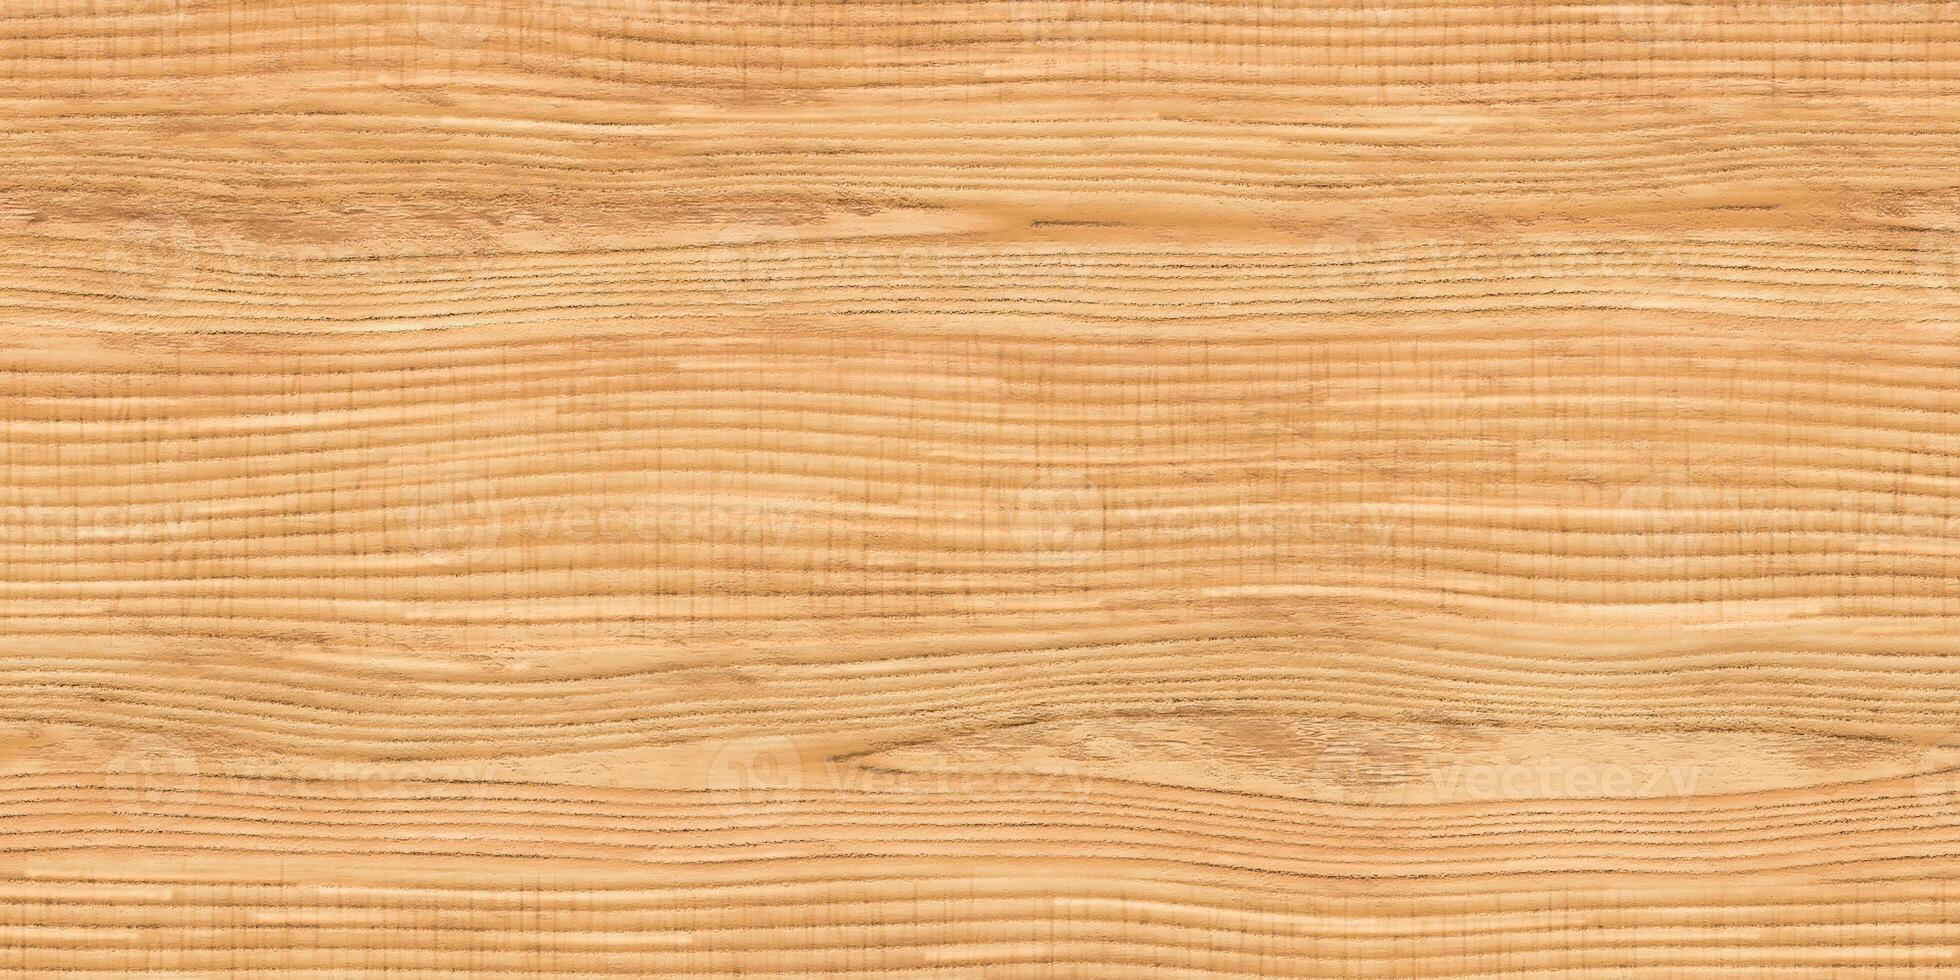 cedar white wood texture background photo